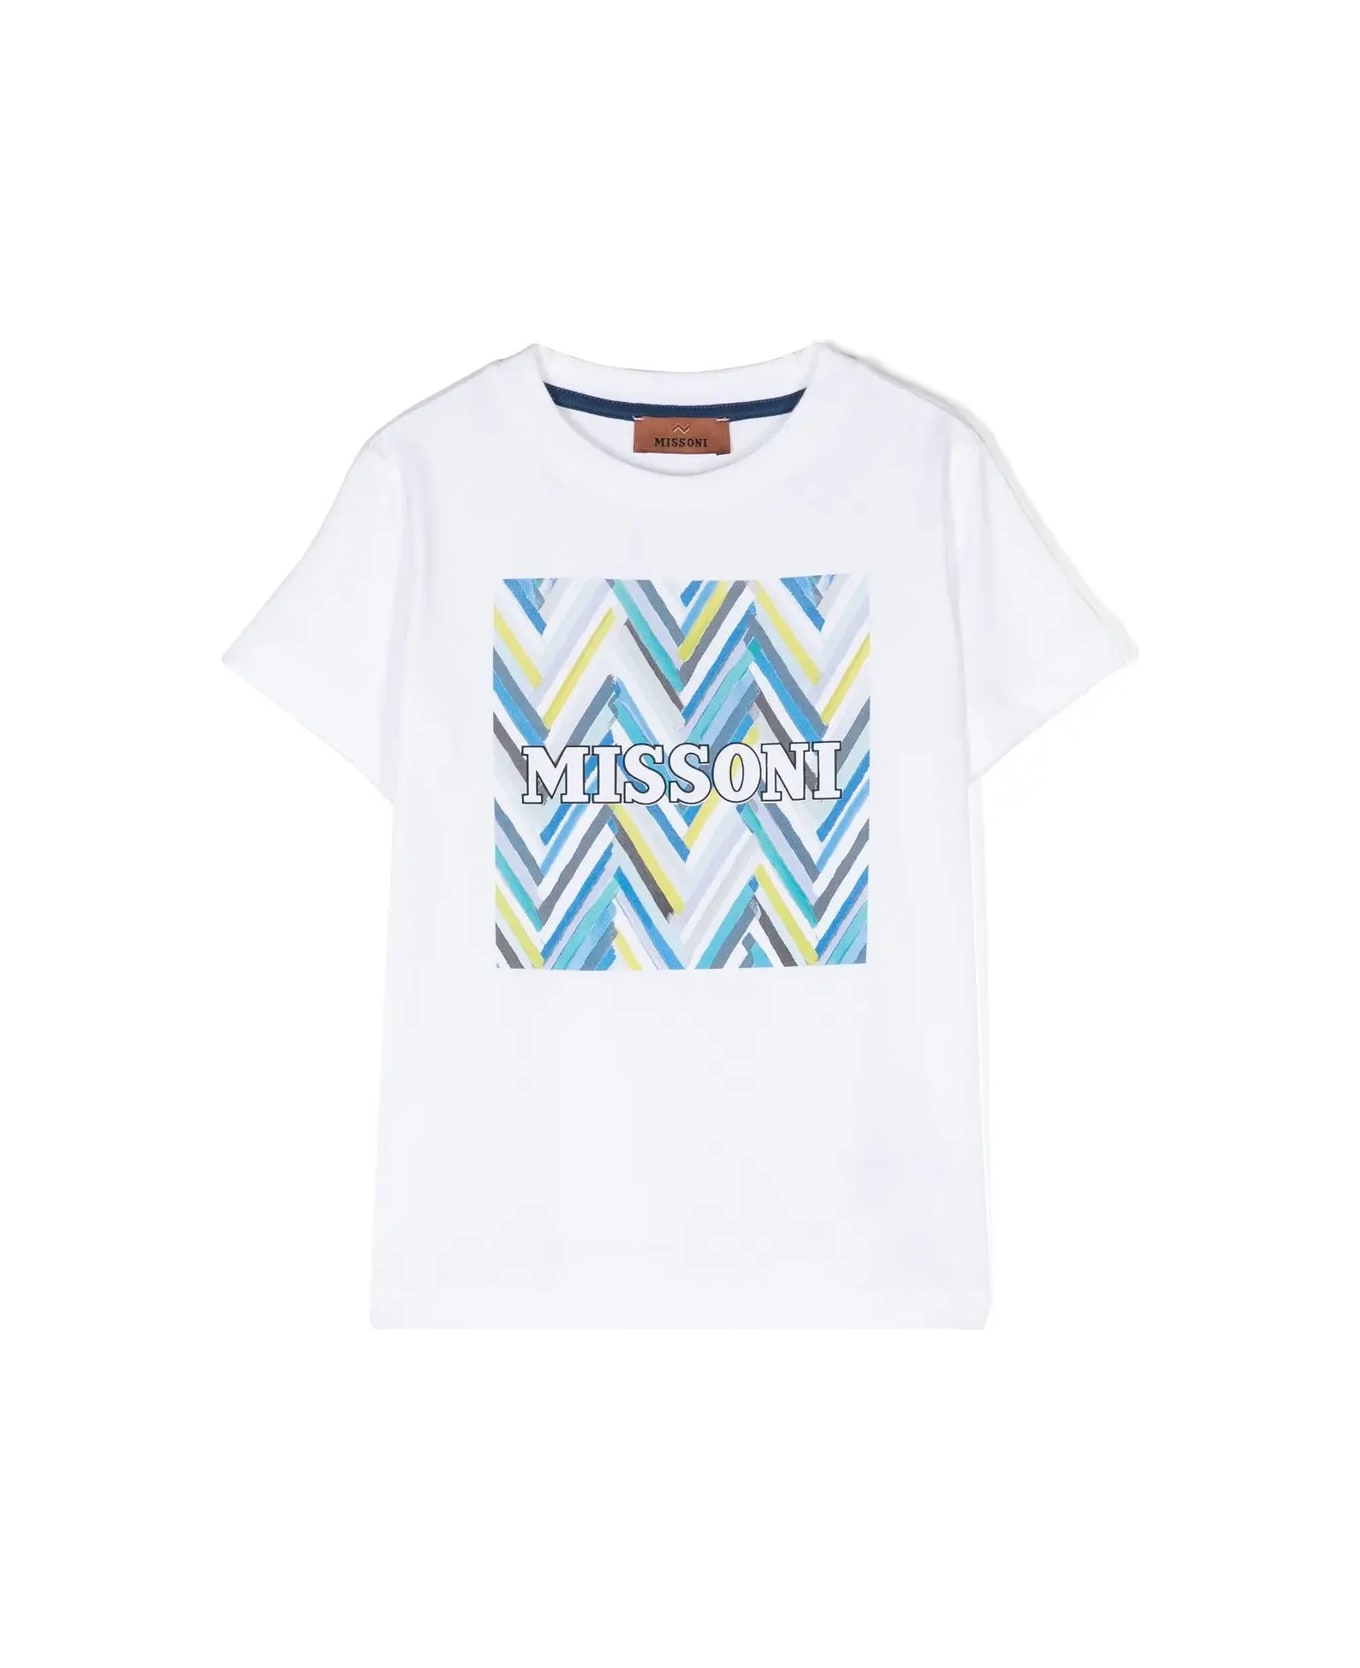 Missoni Kids White T-shirt With Blue Chevron Print - Blue